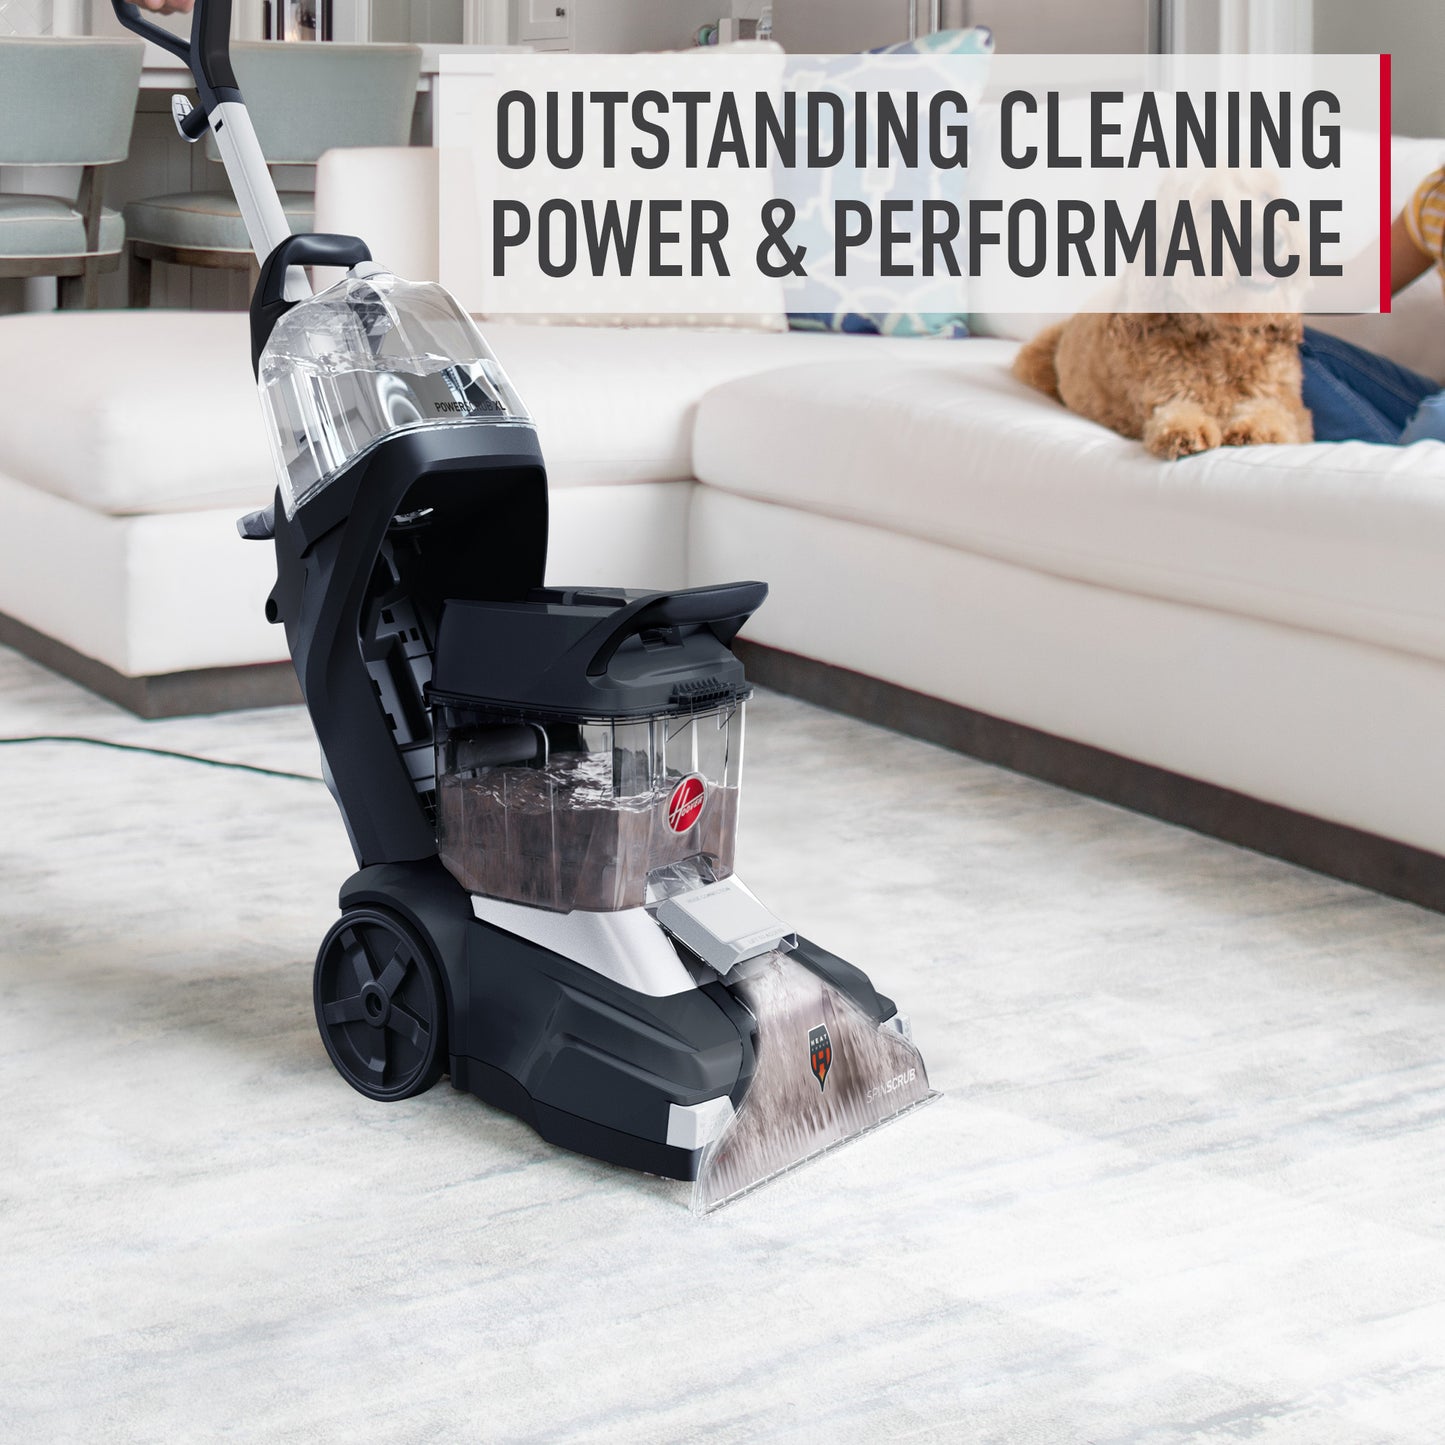 Renewal Carpet Cleaning Formula 128 oz.